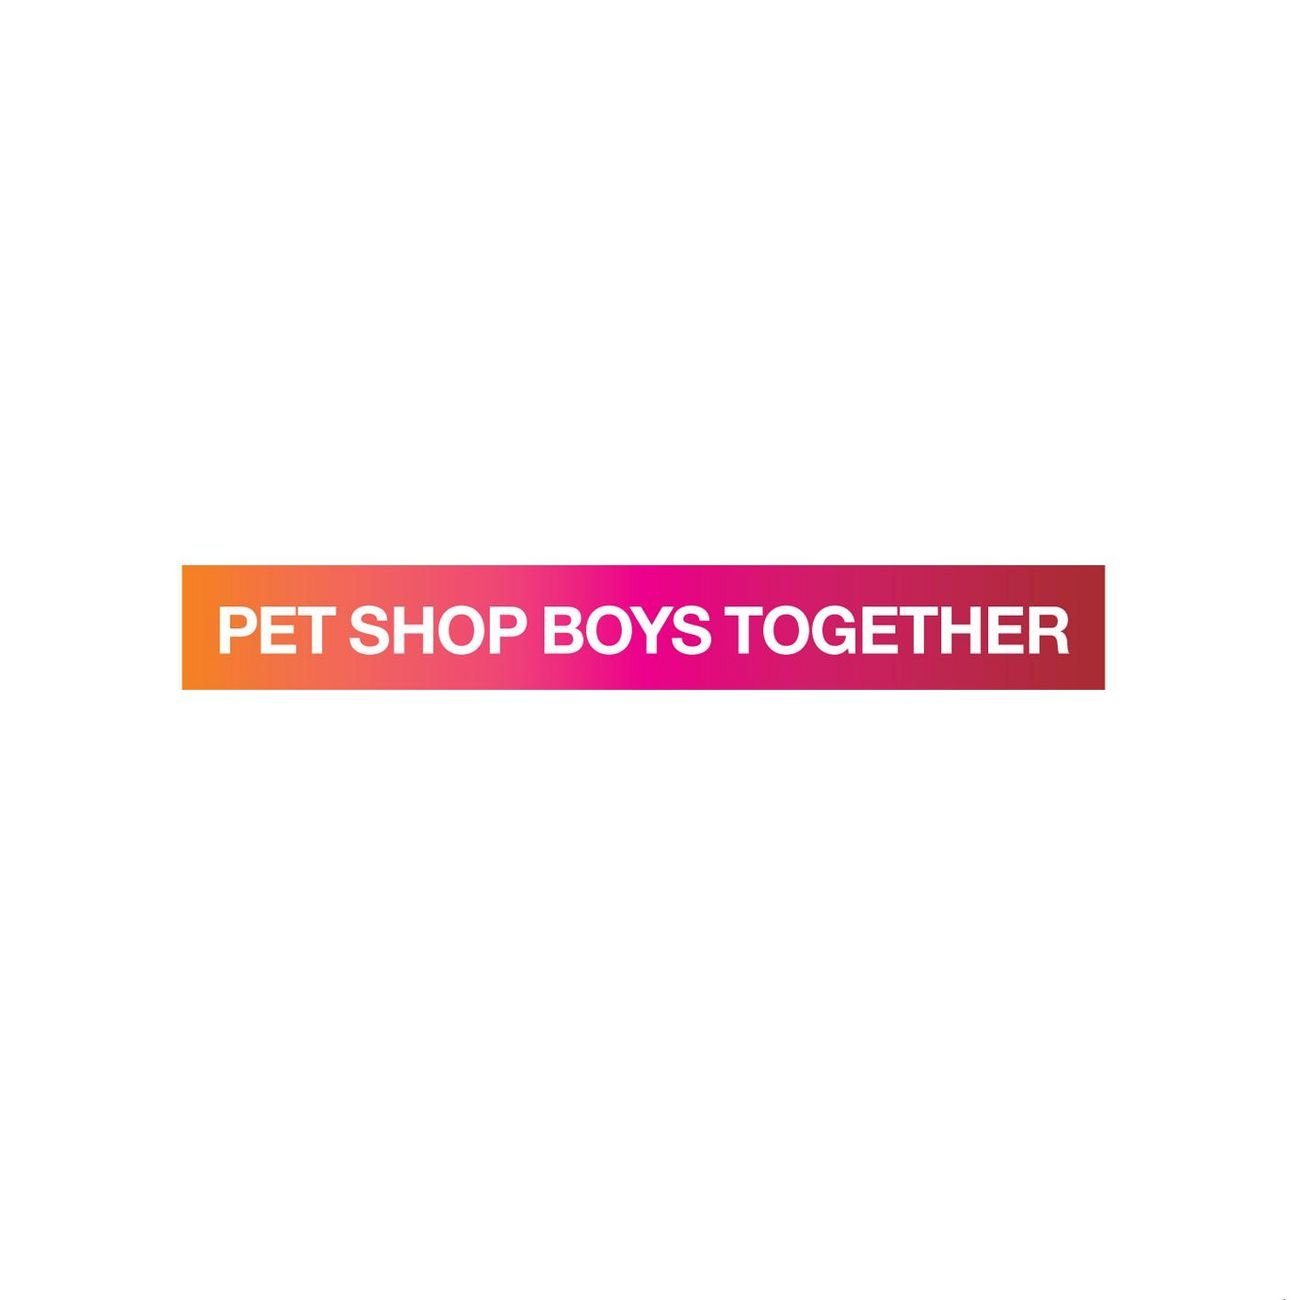 Pet shop boys Ultimate. Pet shop boys together. Pet shop boys Elysium further Listening. Pet shop boys fundamental. Pet shop boys текст